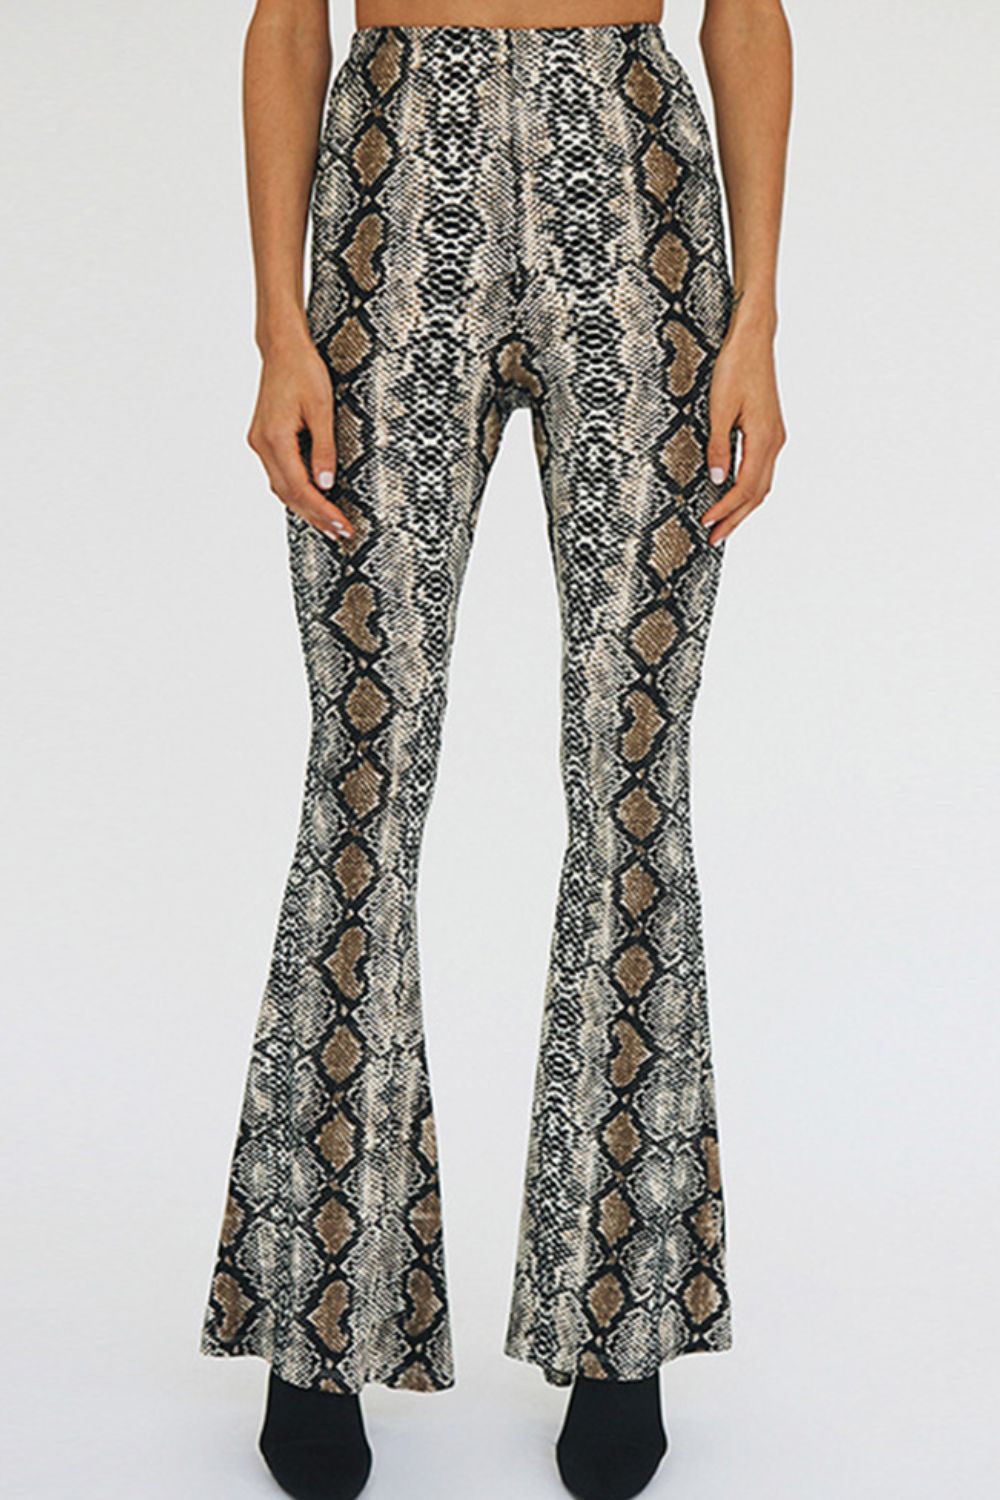 Men Shiny Power Stretch Pants Trousers Party Snakeskin Leopard Print  Clubwear | eBay